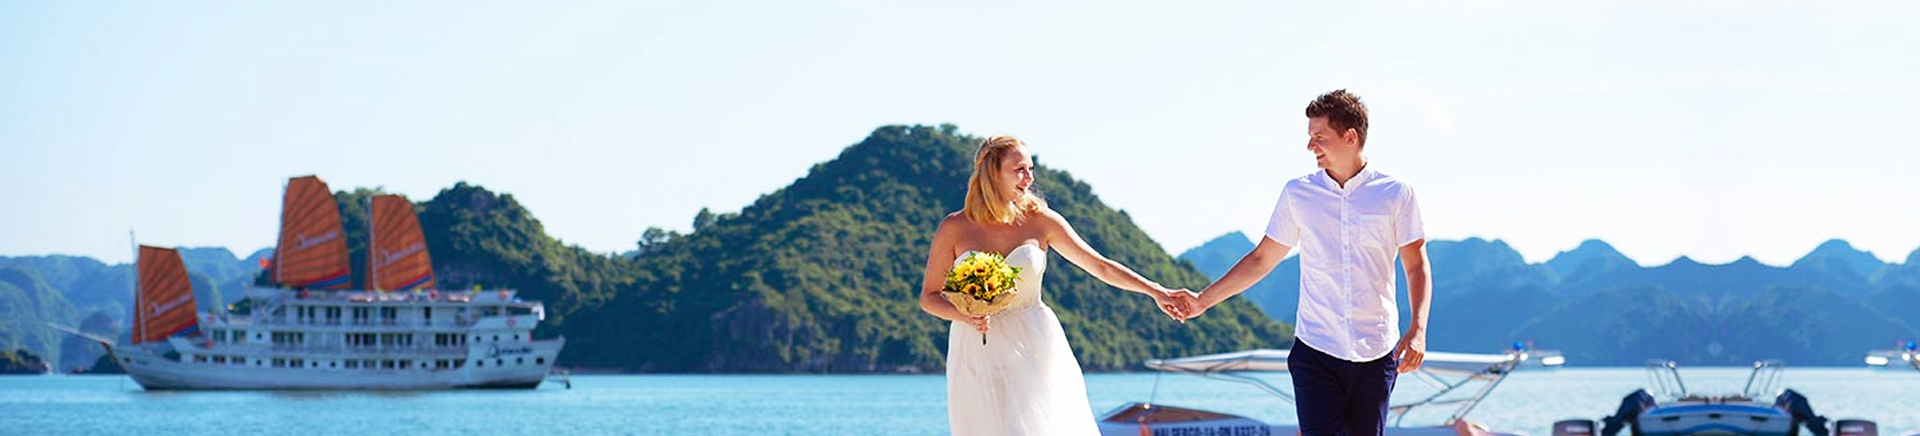 Halong honeymoon cruise page